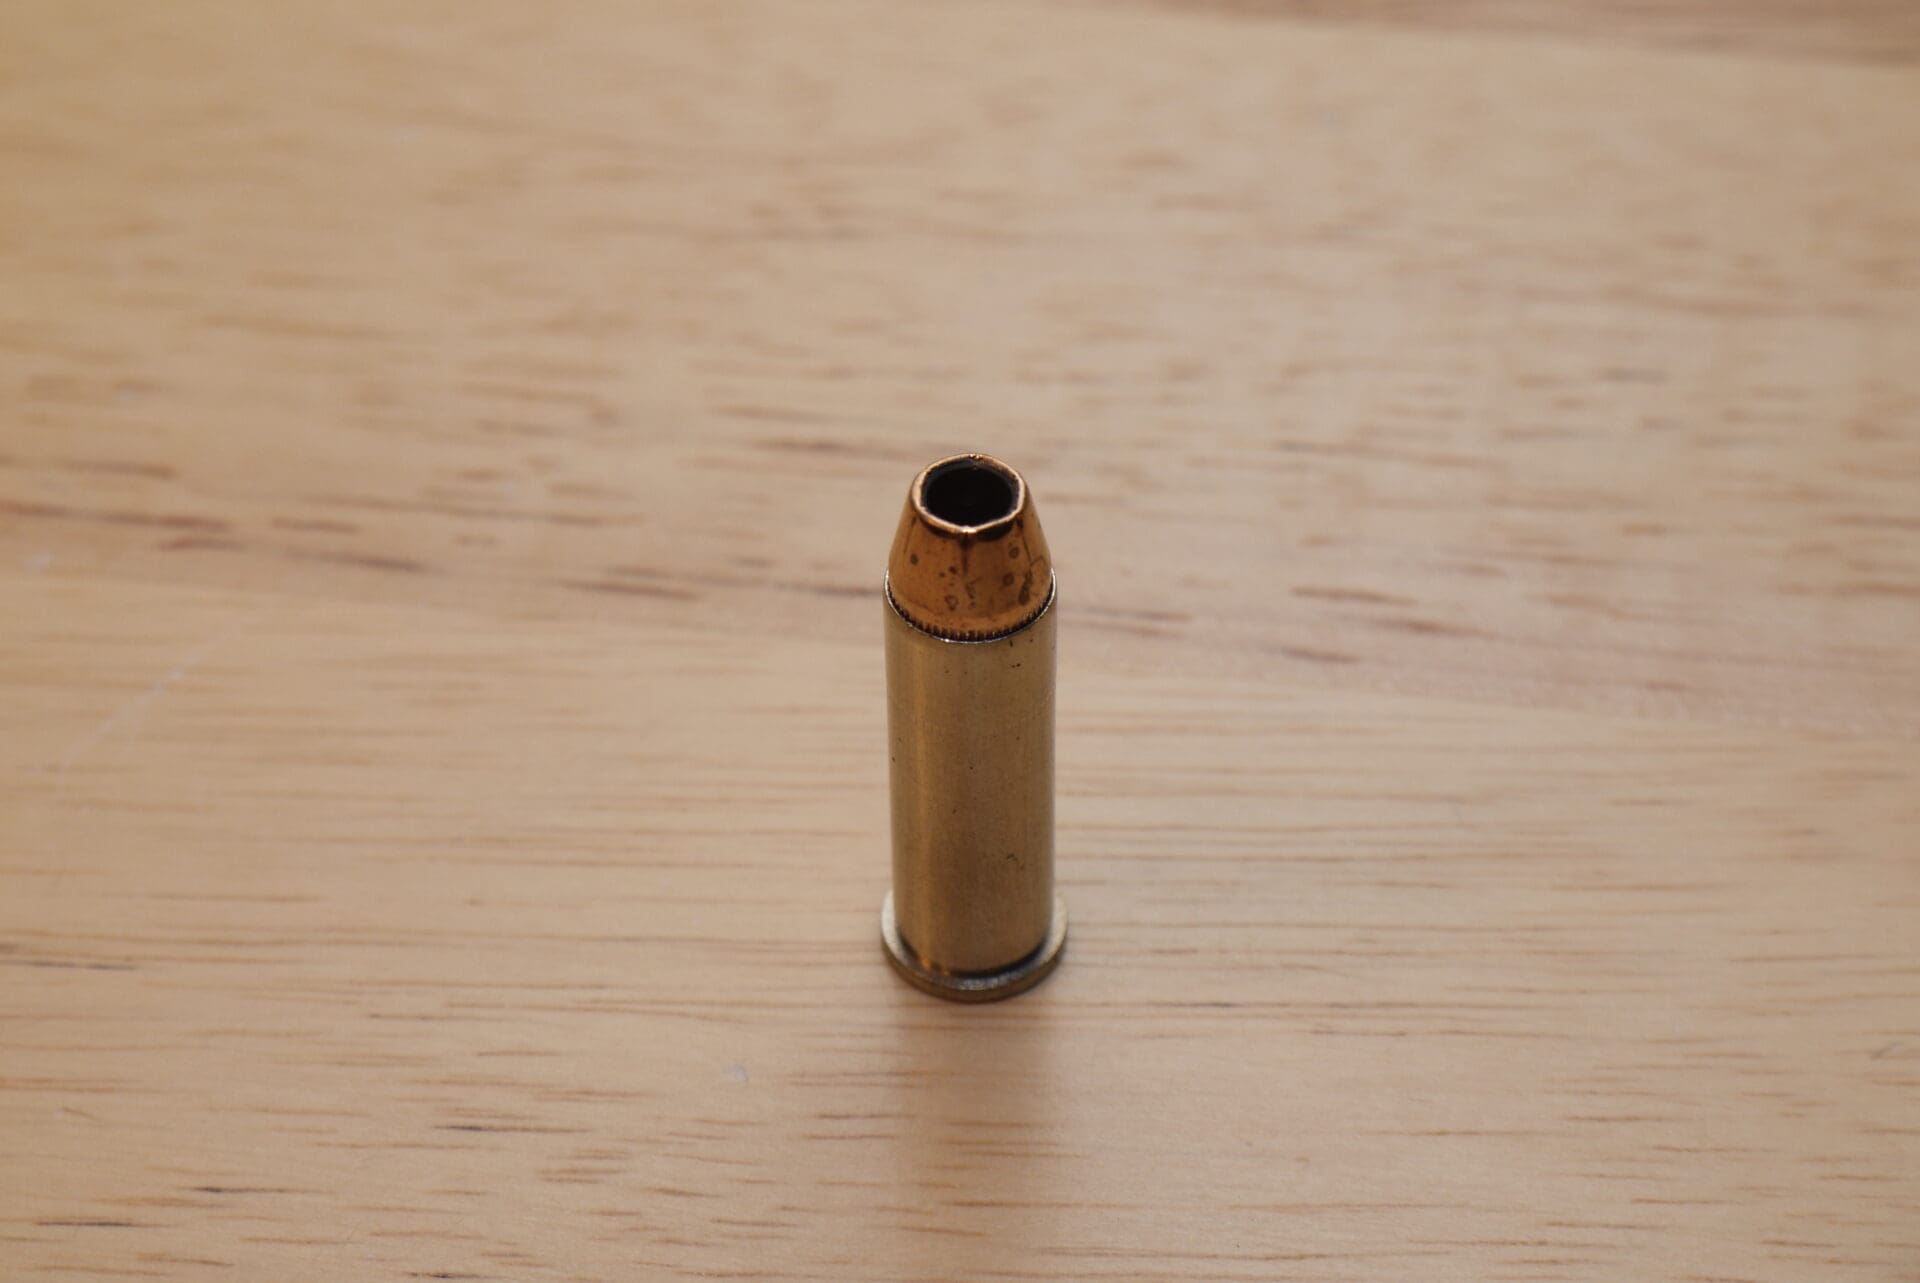 Hollow point JHP bullet cartridge Nick Leghorn